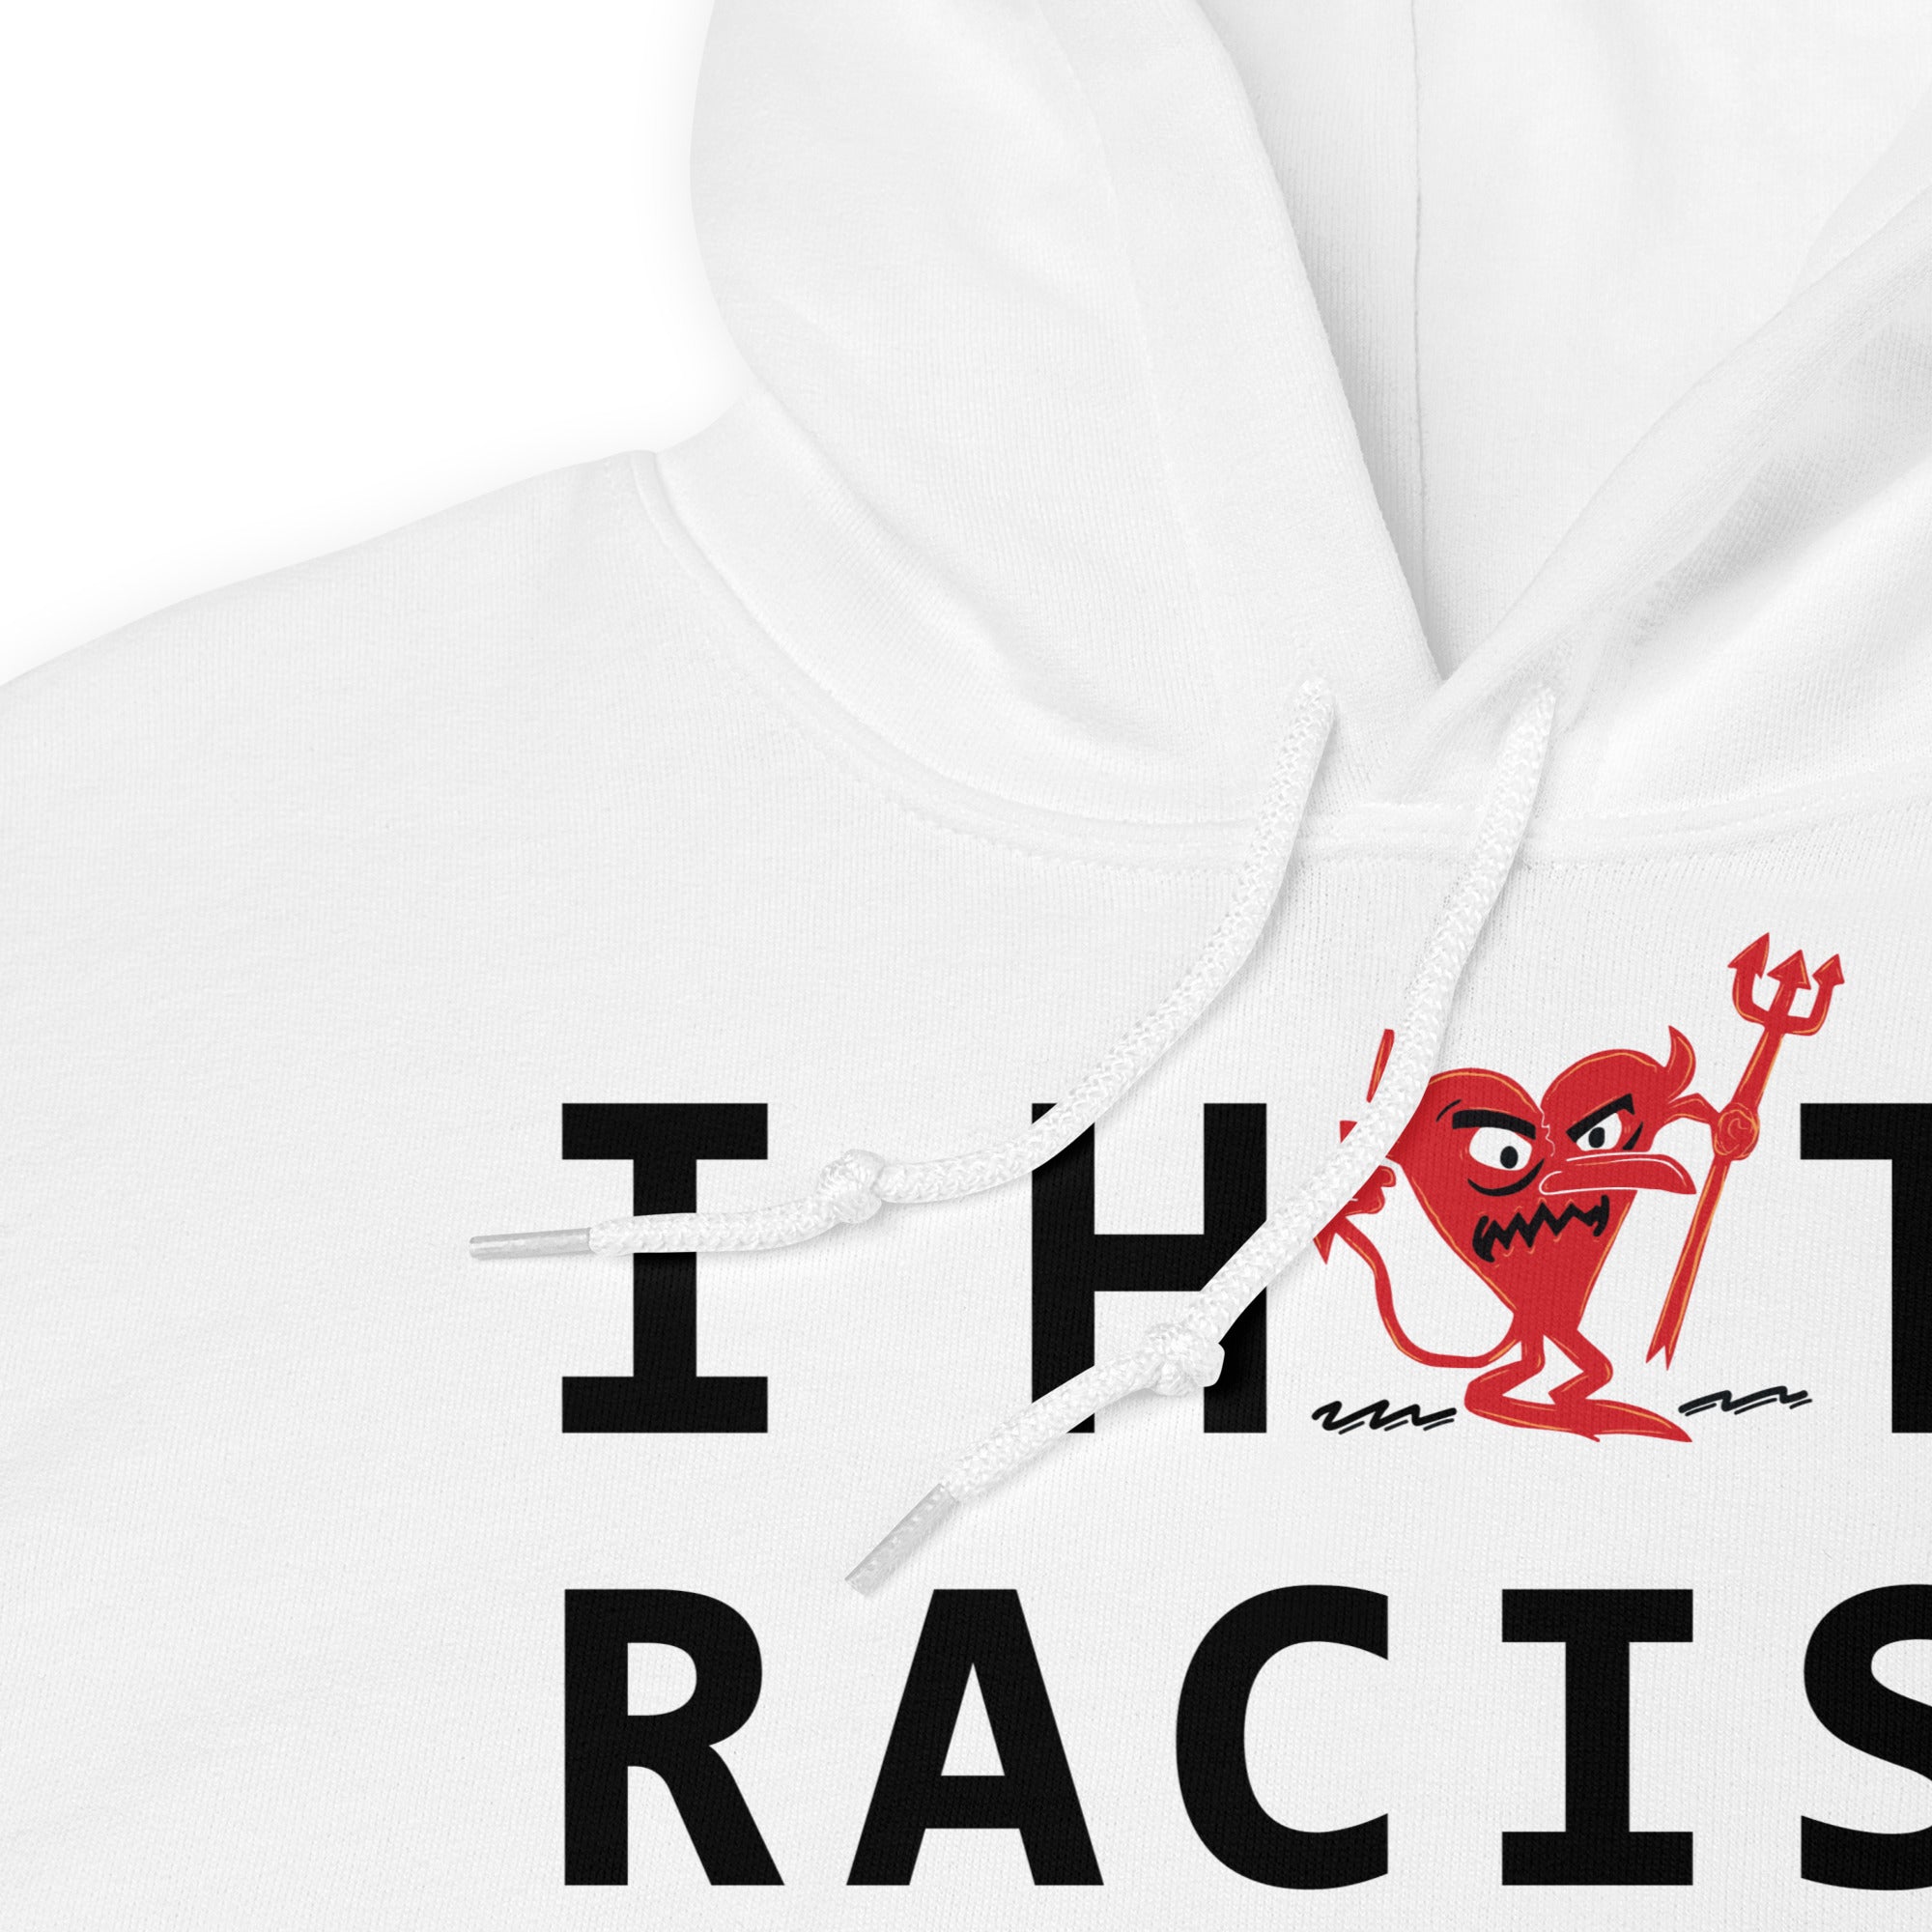 I Hate RACISM Unisex Hoodie